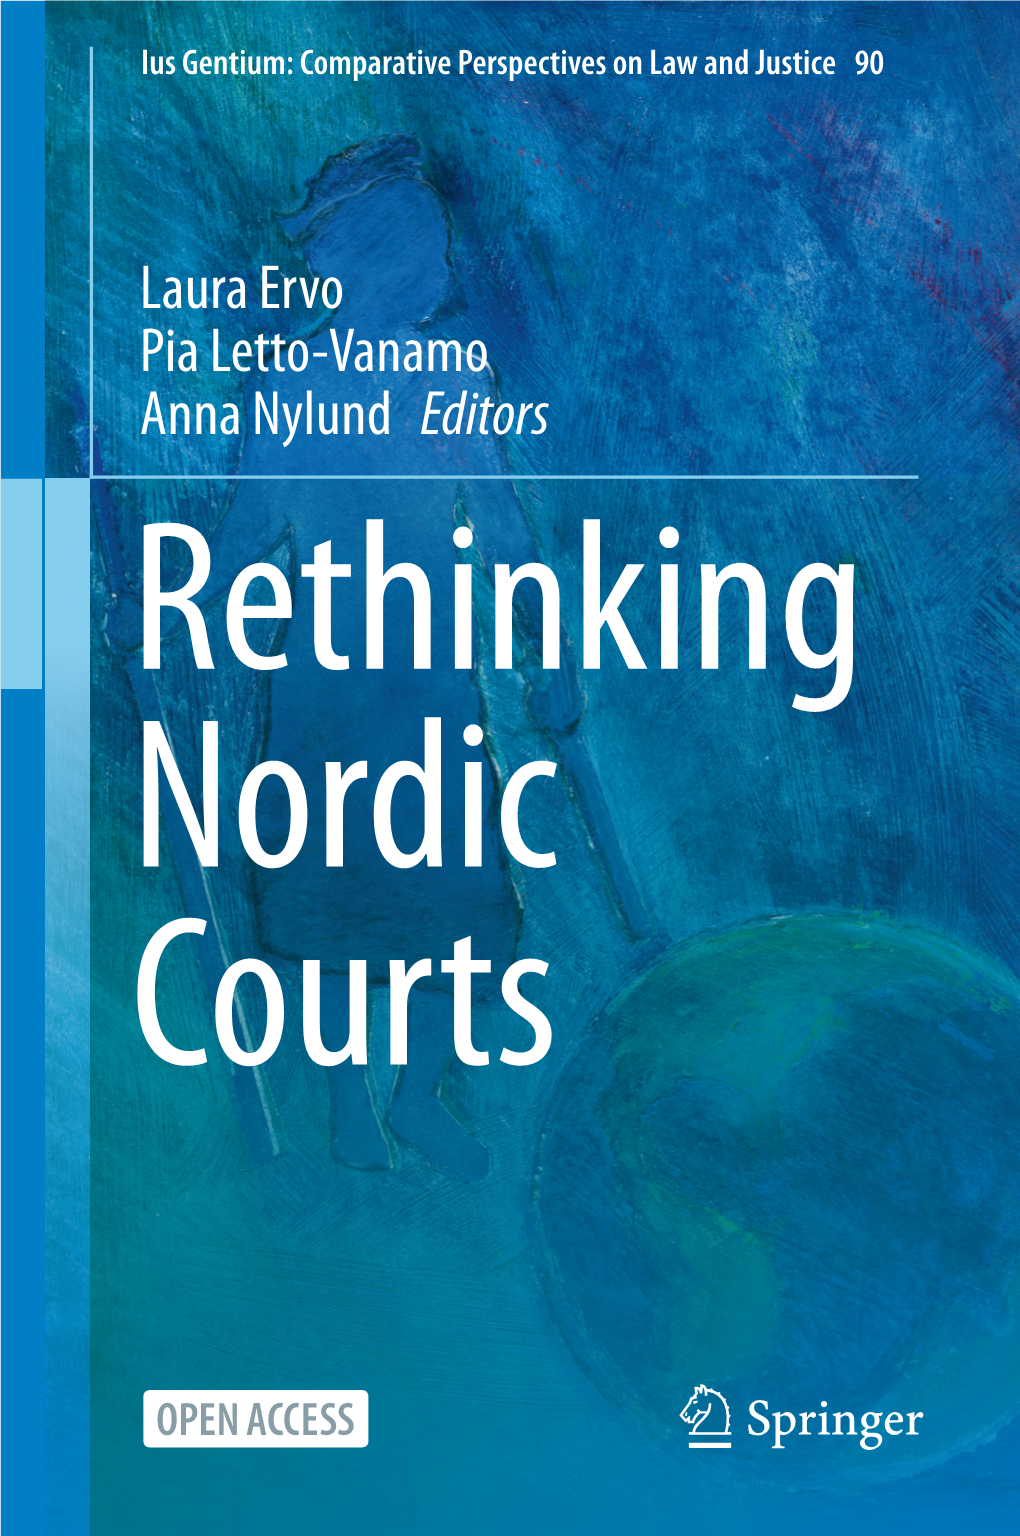 Laura Ervo Pia Letto-Vanamo Anna Nylund Editors Rethinking Nordic Courts Ius Gentium: Comparative Perspectives on Law and Justice